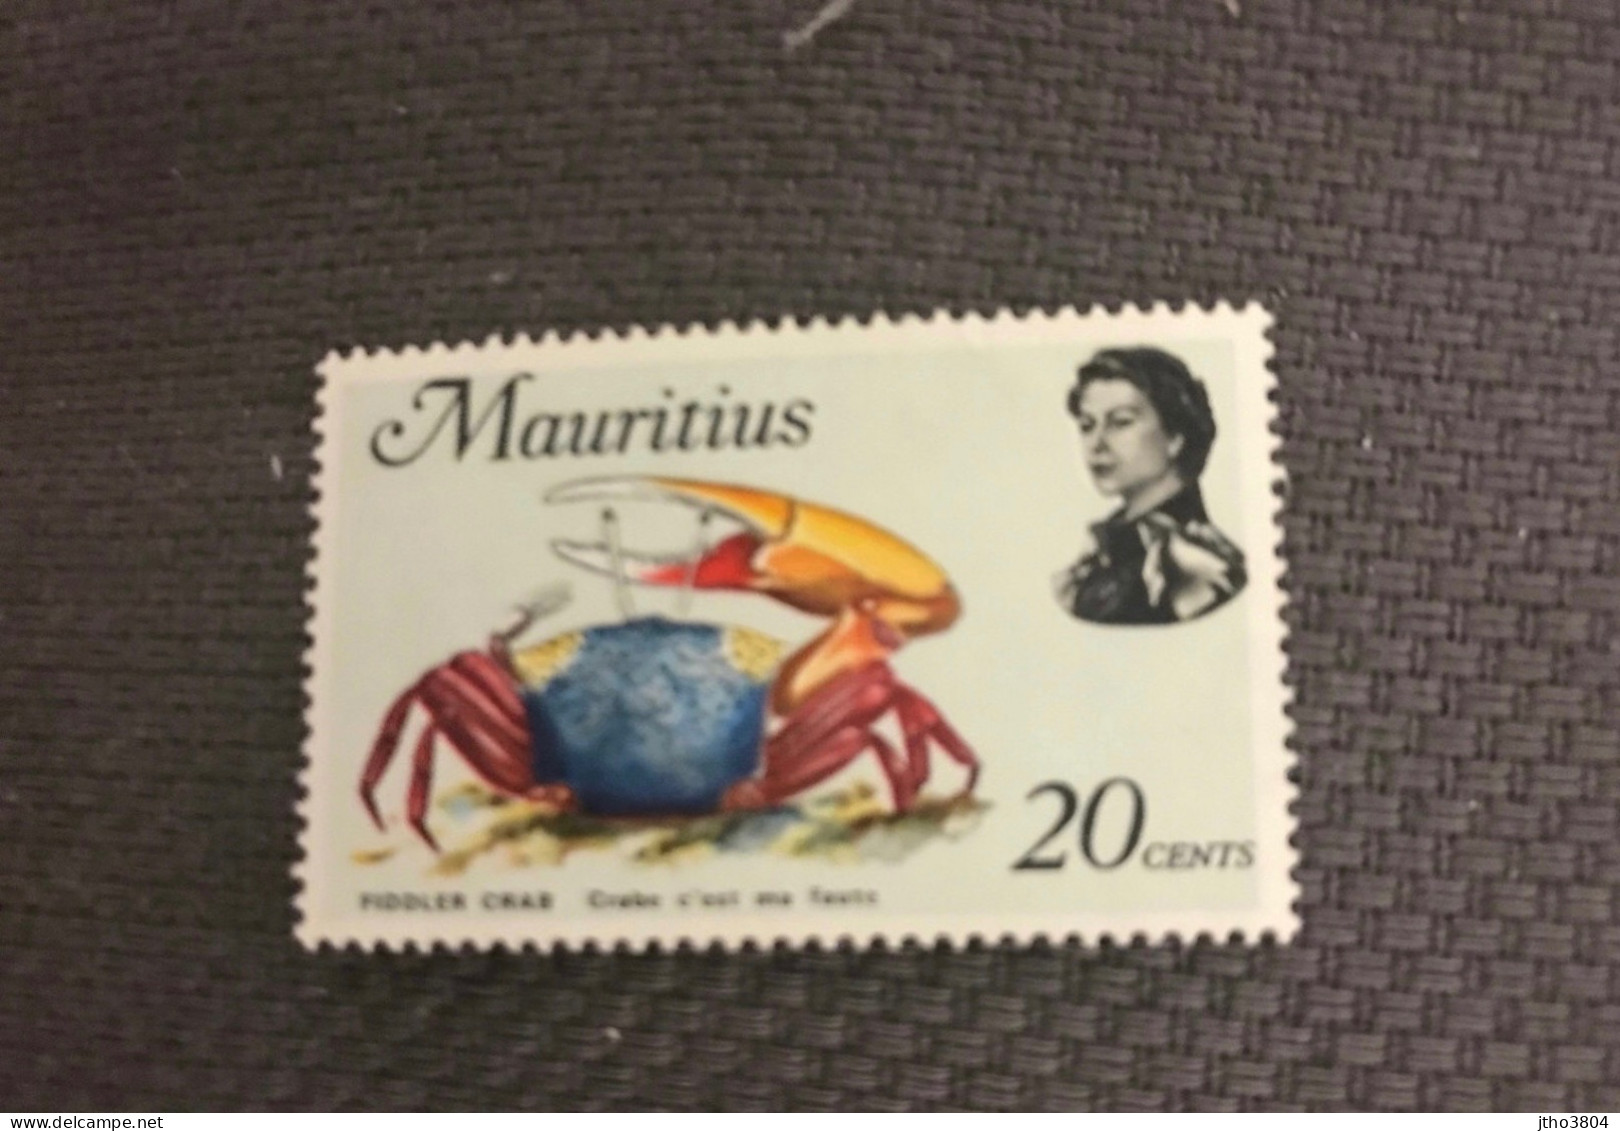 MAURICE 1969 1v Neuf MNH ** Mi 330 Marine Life Shrimp Conchas Shells Muscheln Conchoglie MAURITIUS - Maurice (1968-...)